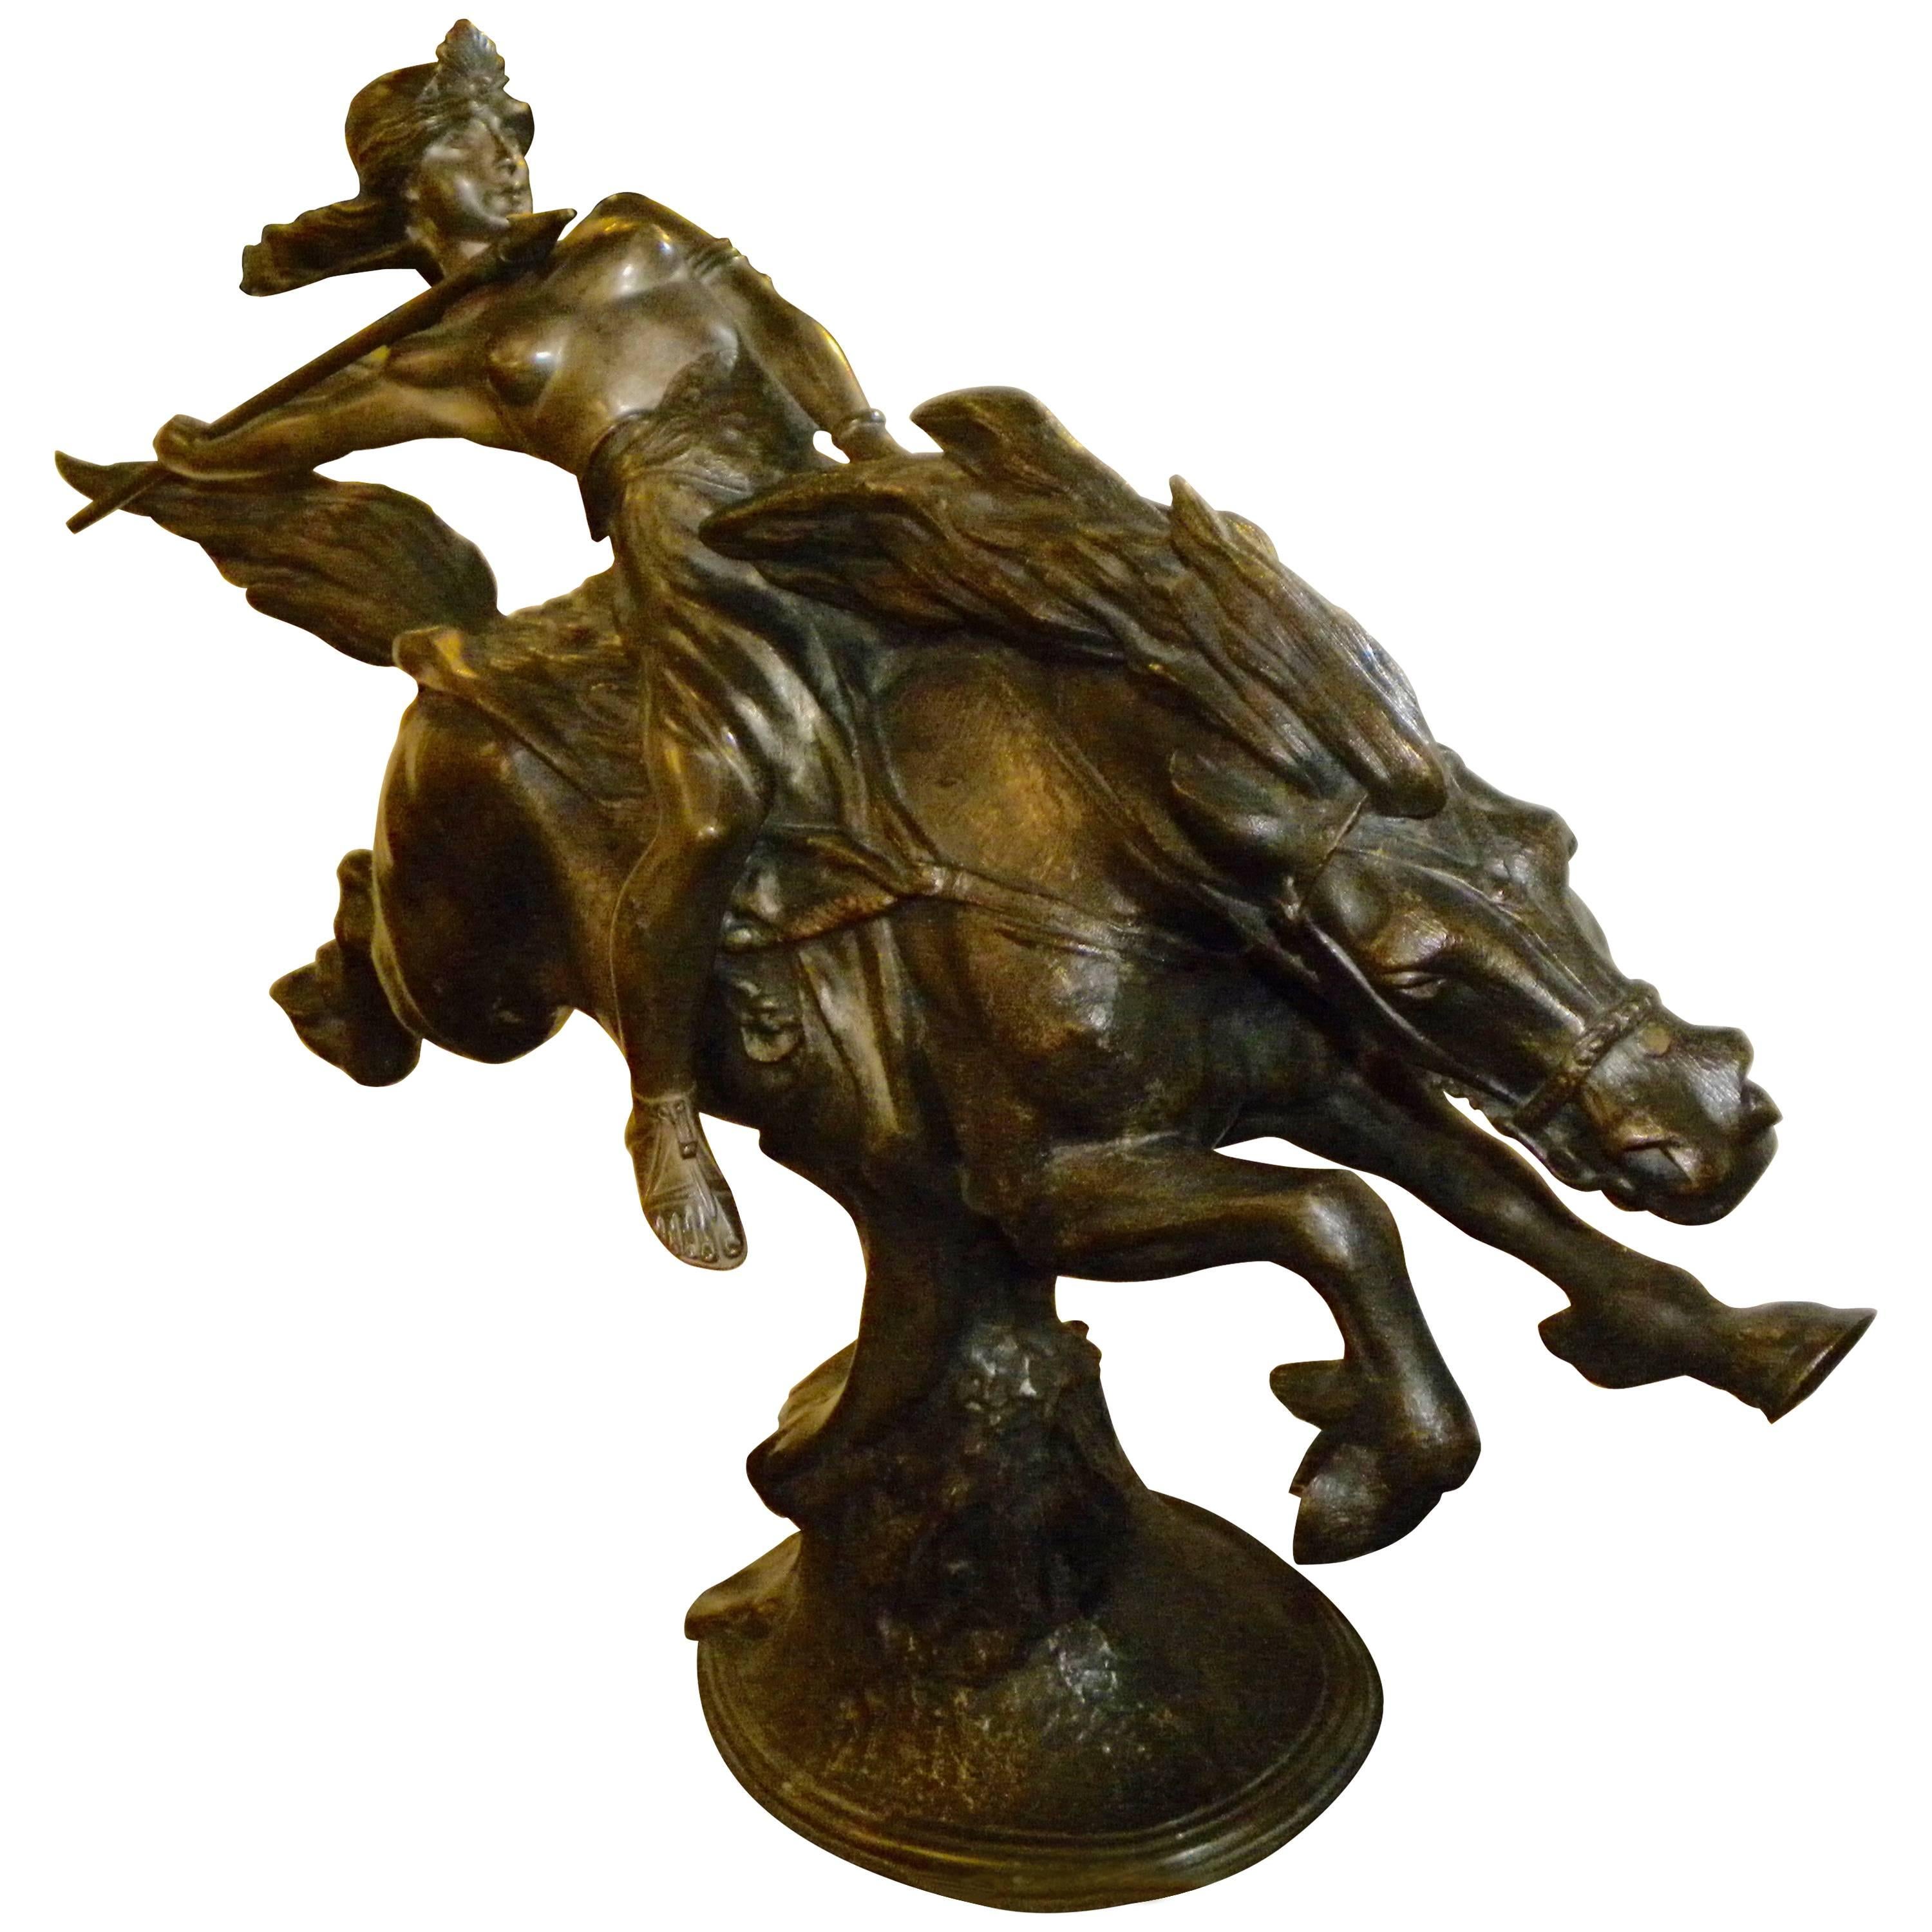 Bronze Sculpture of Amazon Woman Warrior on Horseback by Bosquet